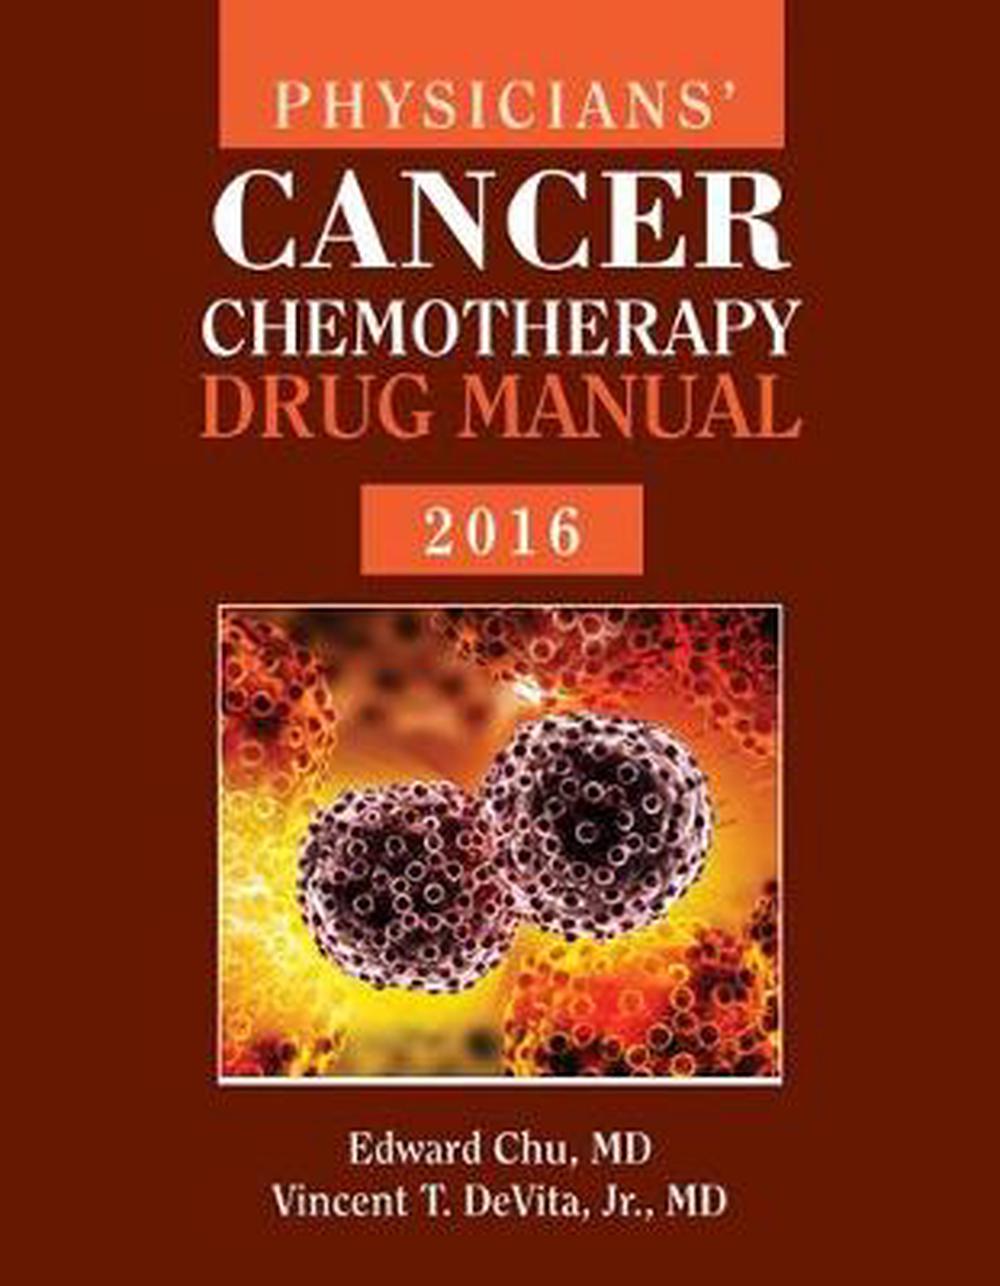 Physicians' Cancer Chemotherapy Drug Manual by Edward Chu, Paperback